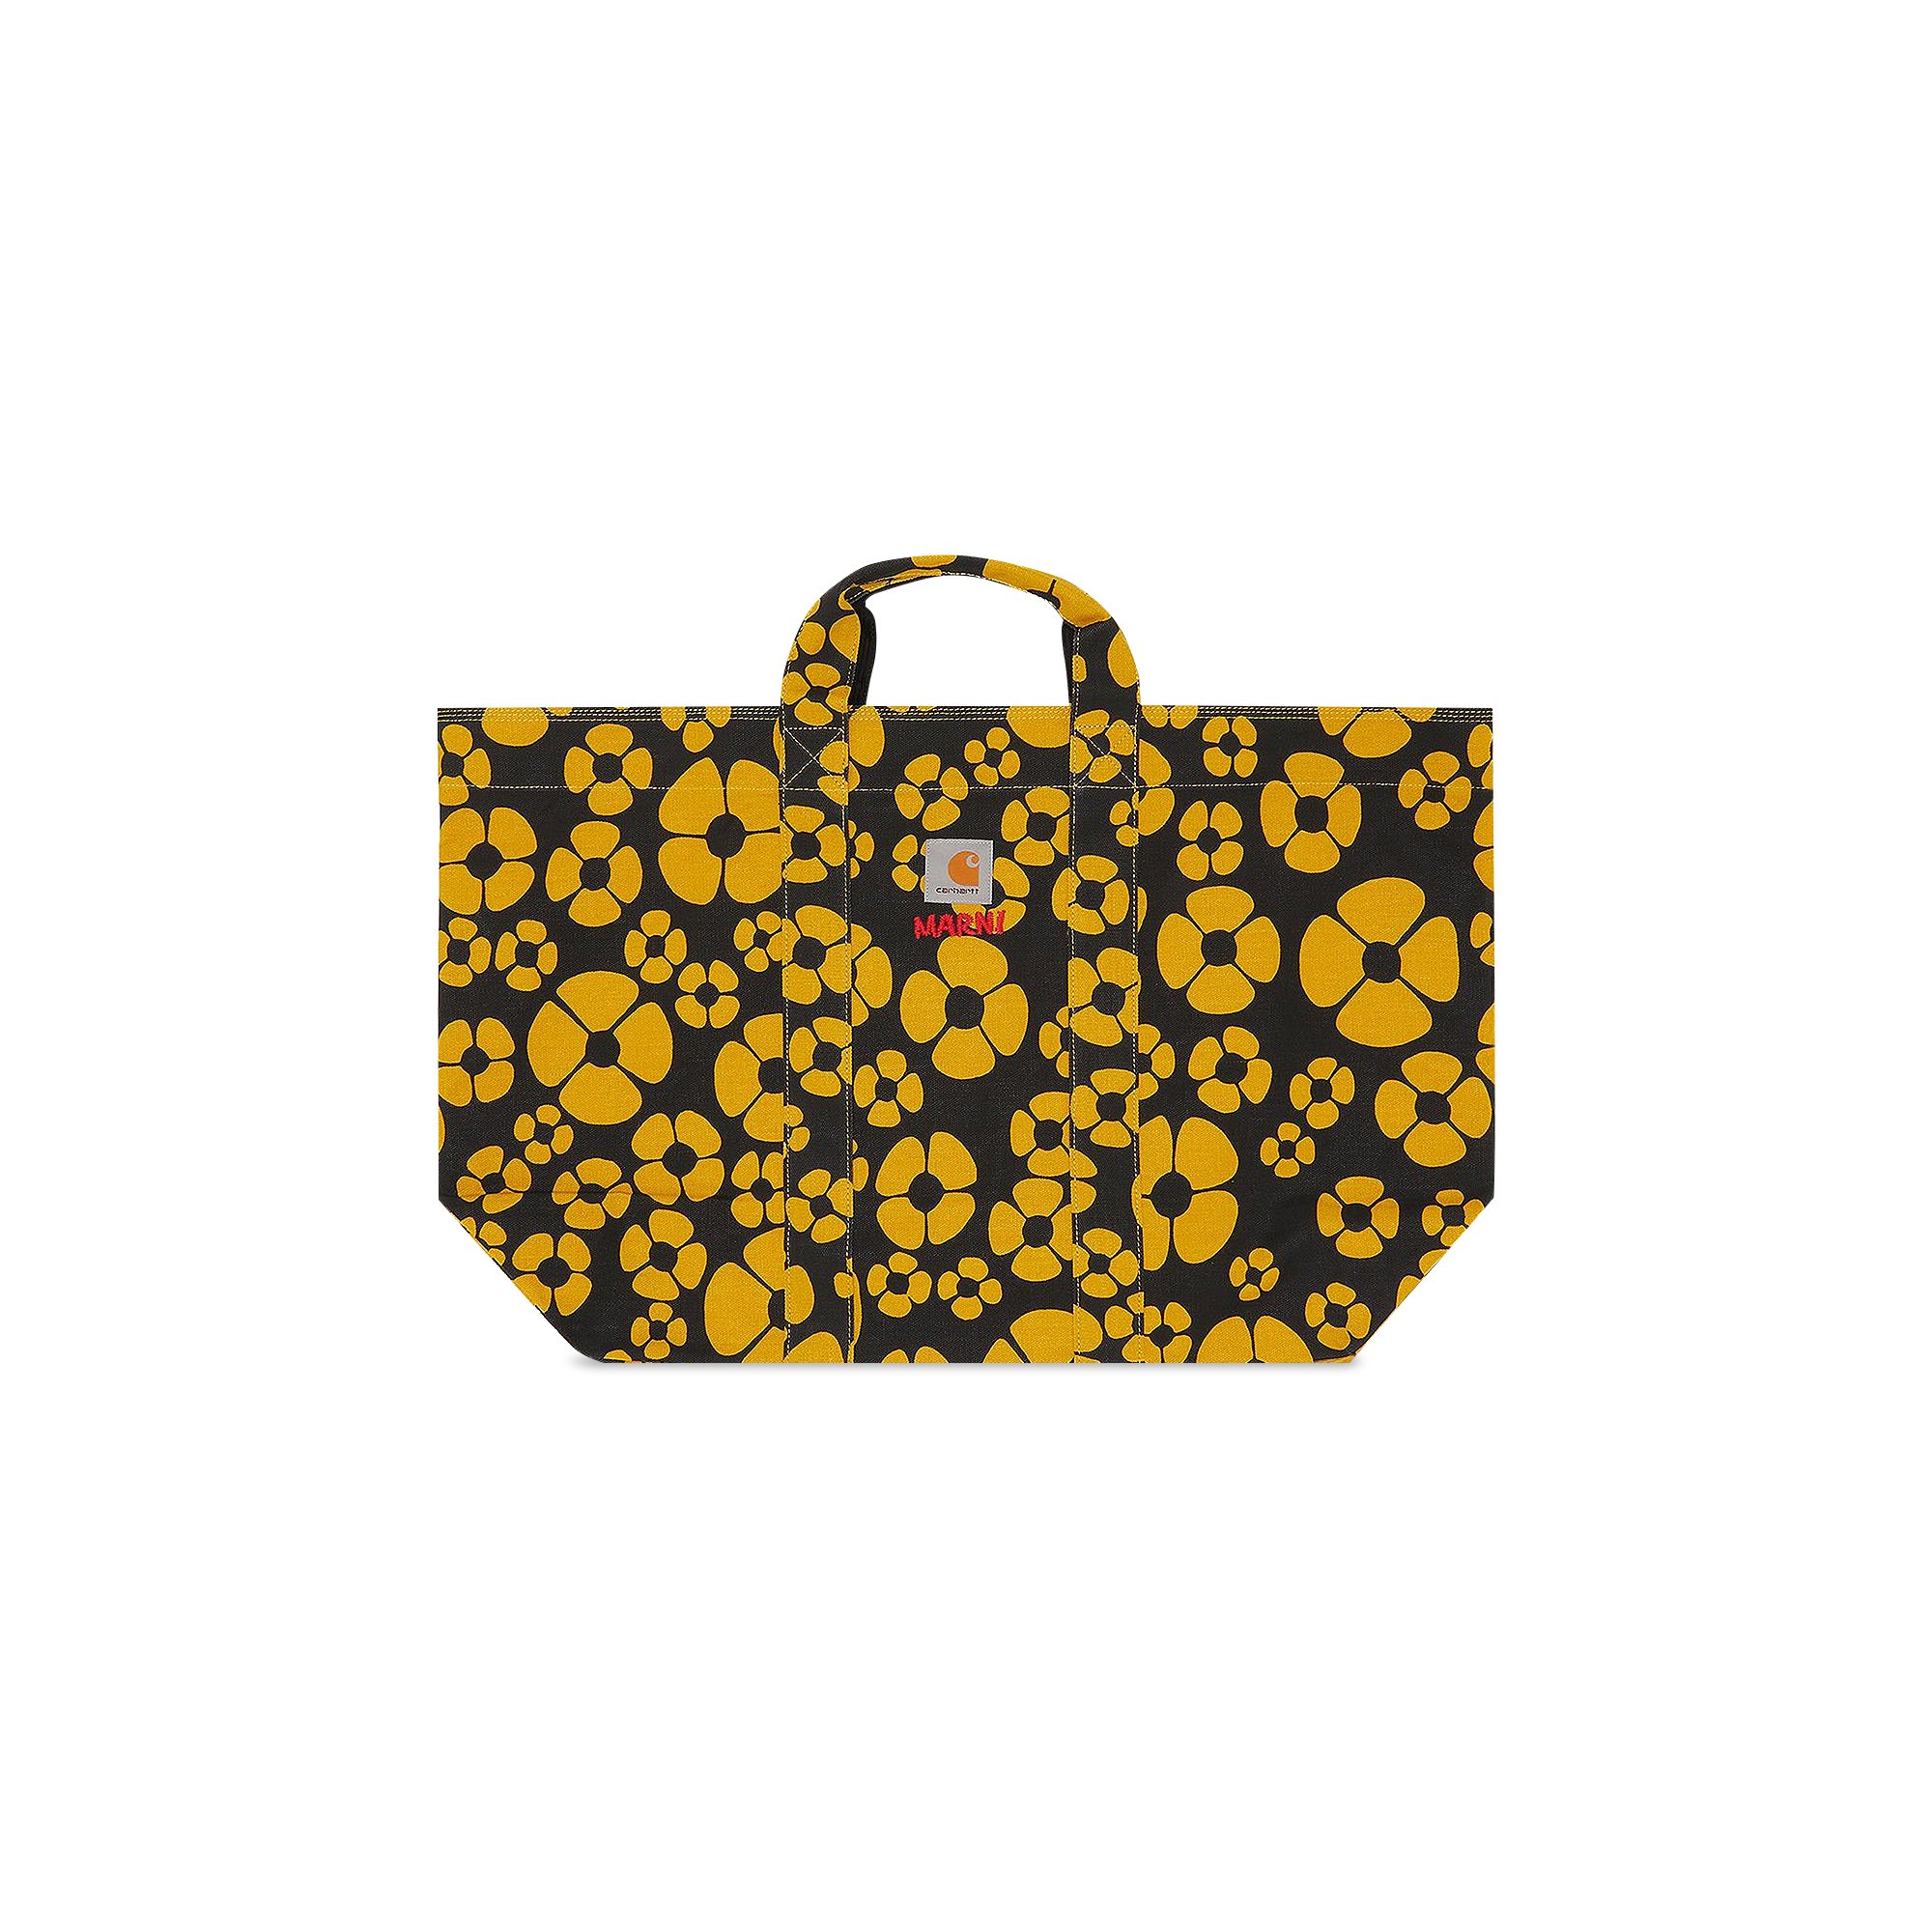 Buy Marni x Carhartt WIP Tote Bag 'Black/Sun' - SHMQ0050U0 P4927